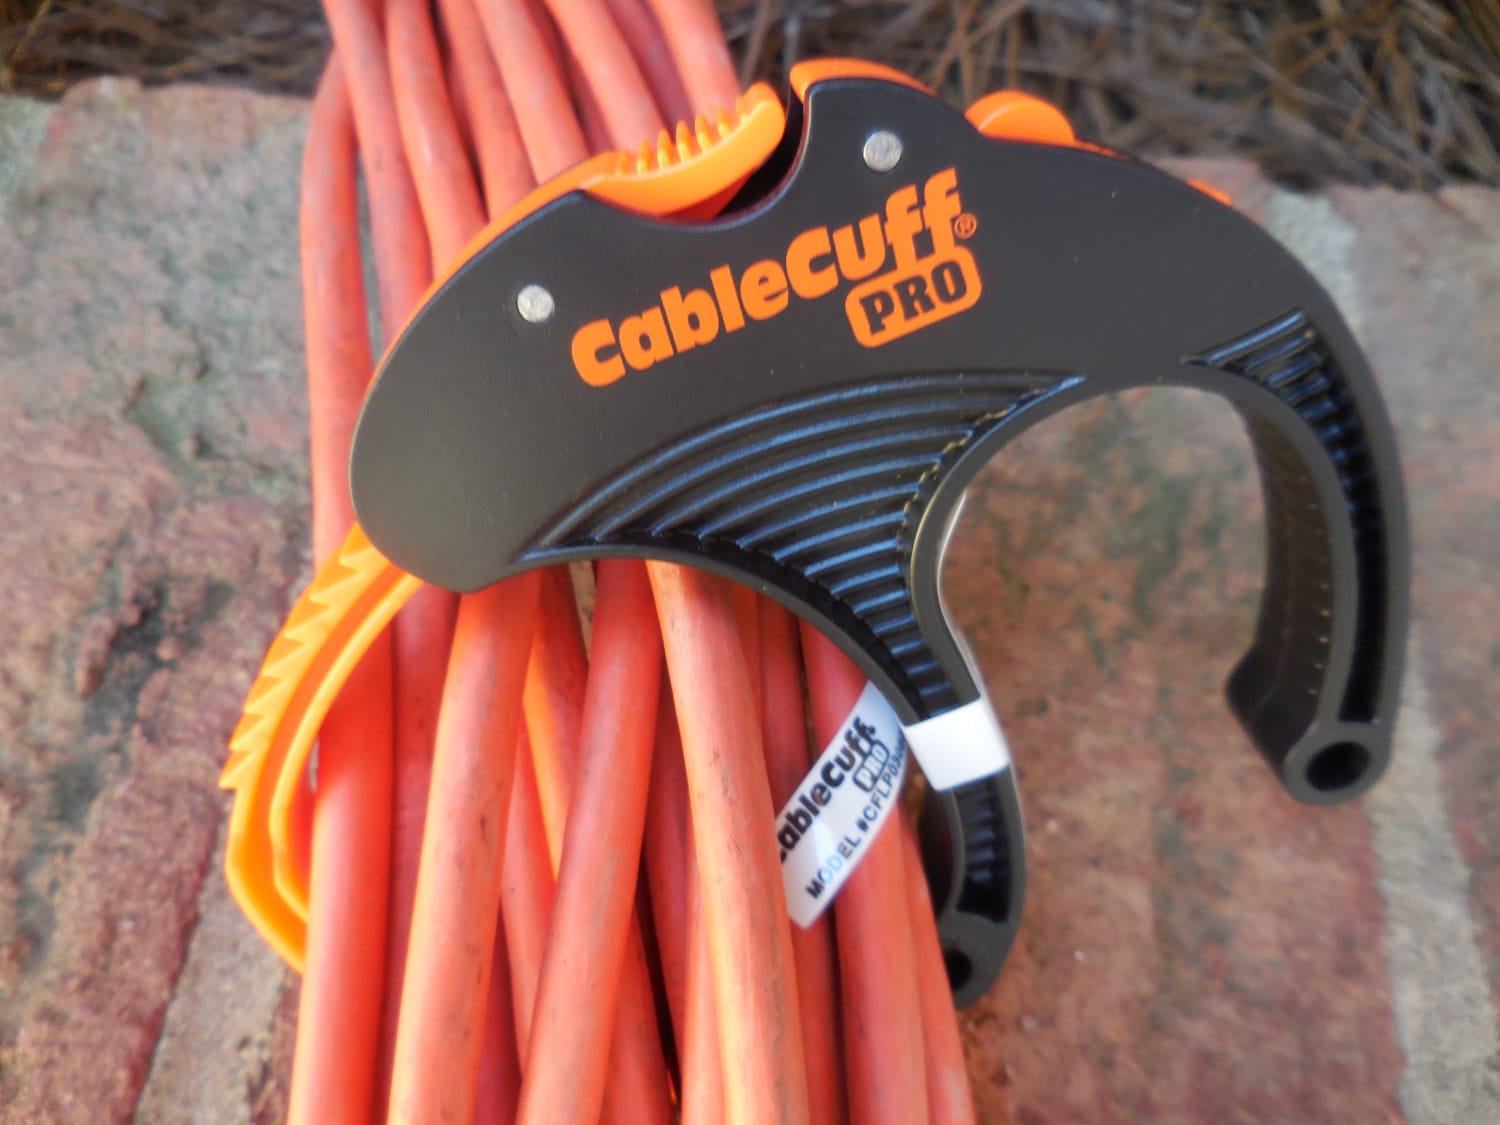 Cable Cuff PRO Medium Adj & Reusable H1 CFMP030808 NEW 2 Pack 